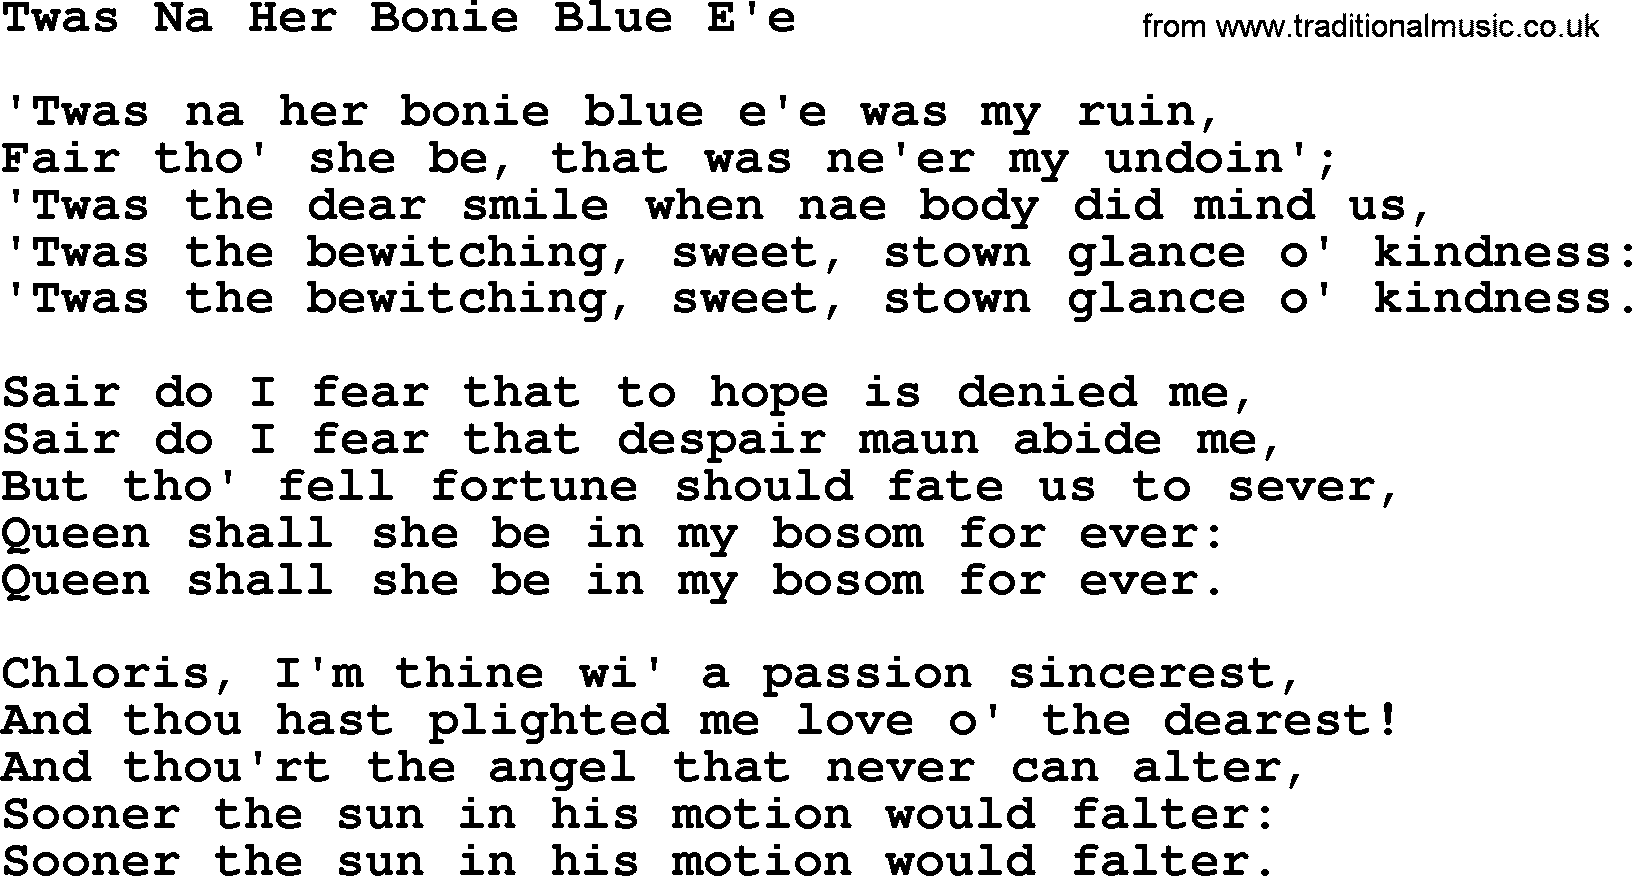 Robert Burns Songs & Lyrics: Twas Na Her Bonie Blue E'e